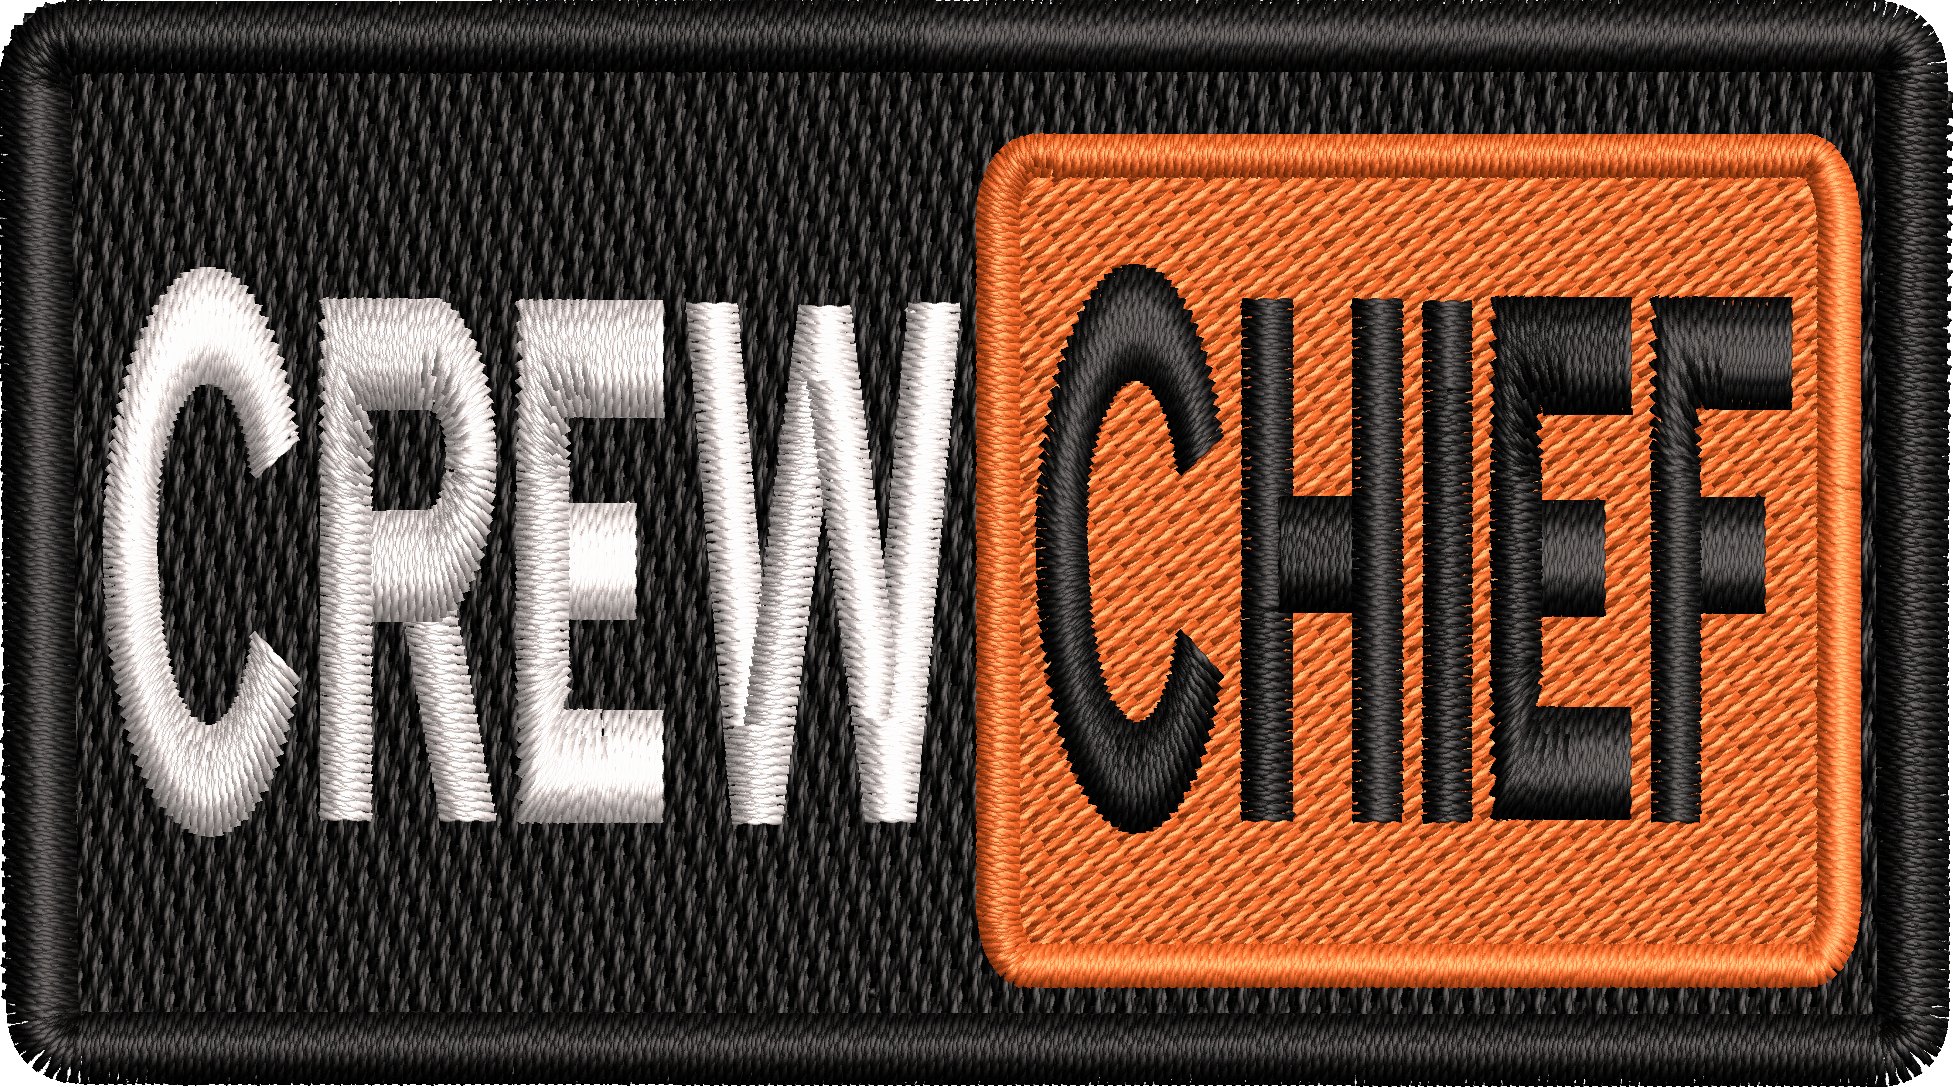 Crew Chief Hub - Duty Identifier Patch